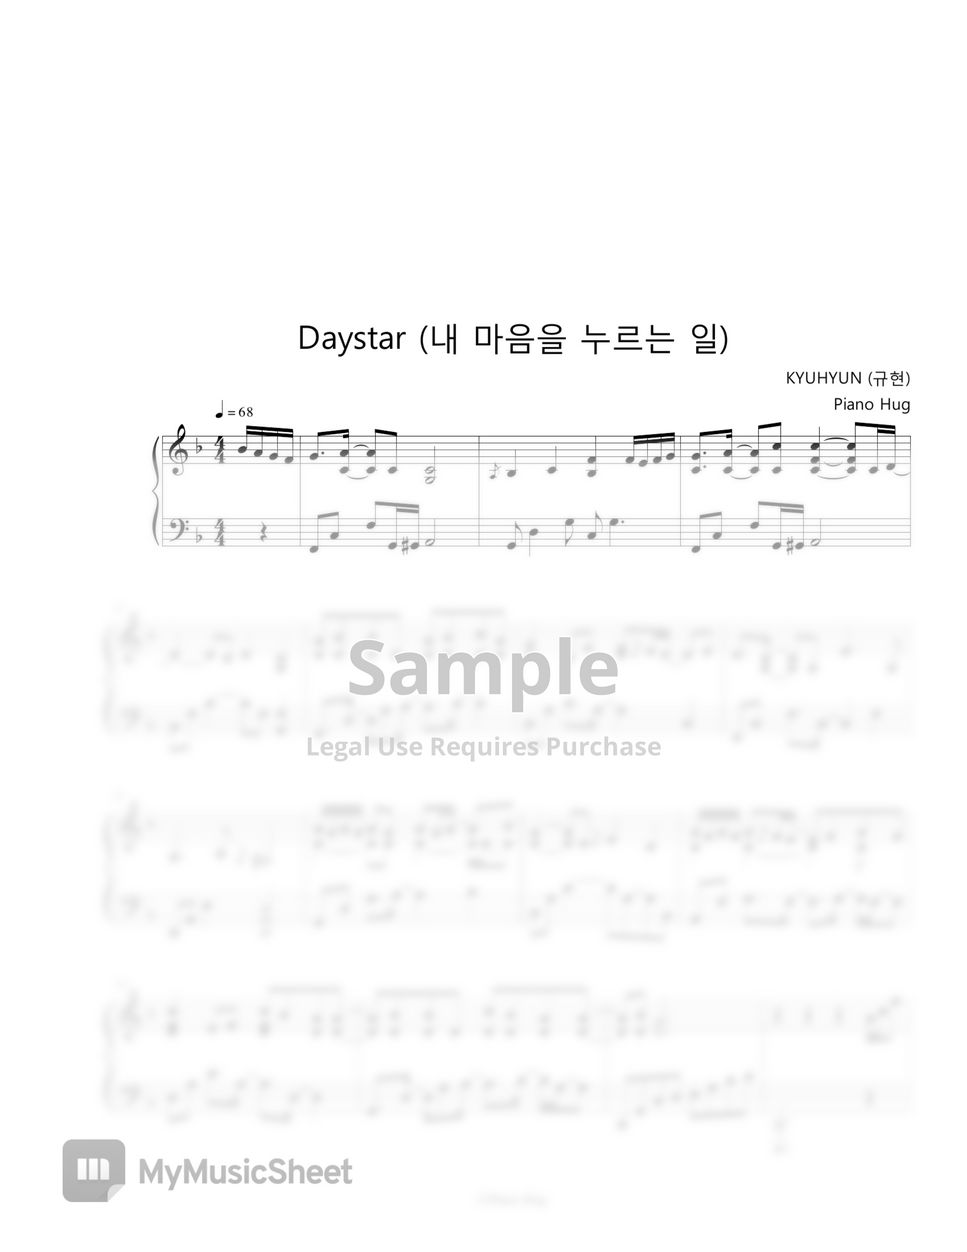 KYUHYUN (규현) - Daystar (내 마음을 누르는 일) by Piano Hug